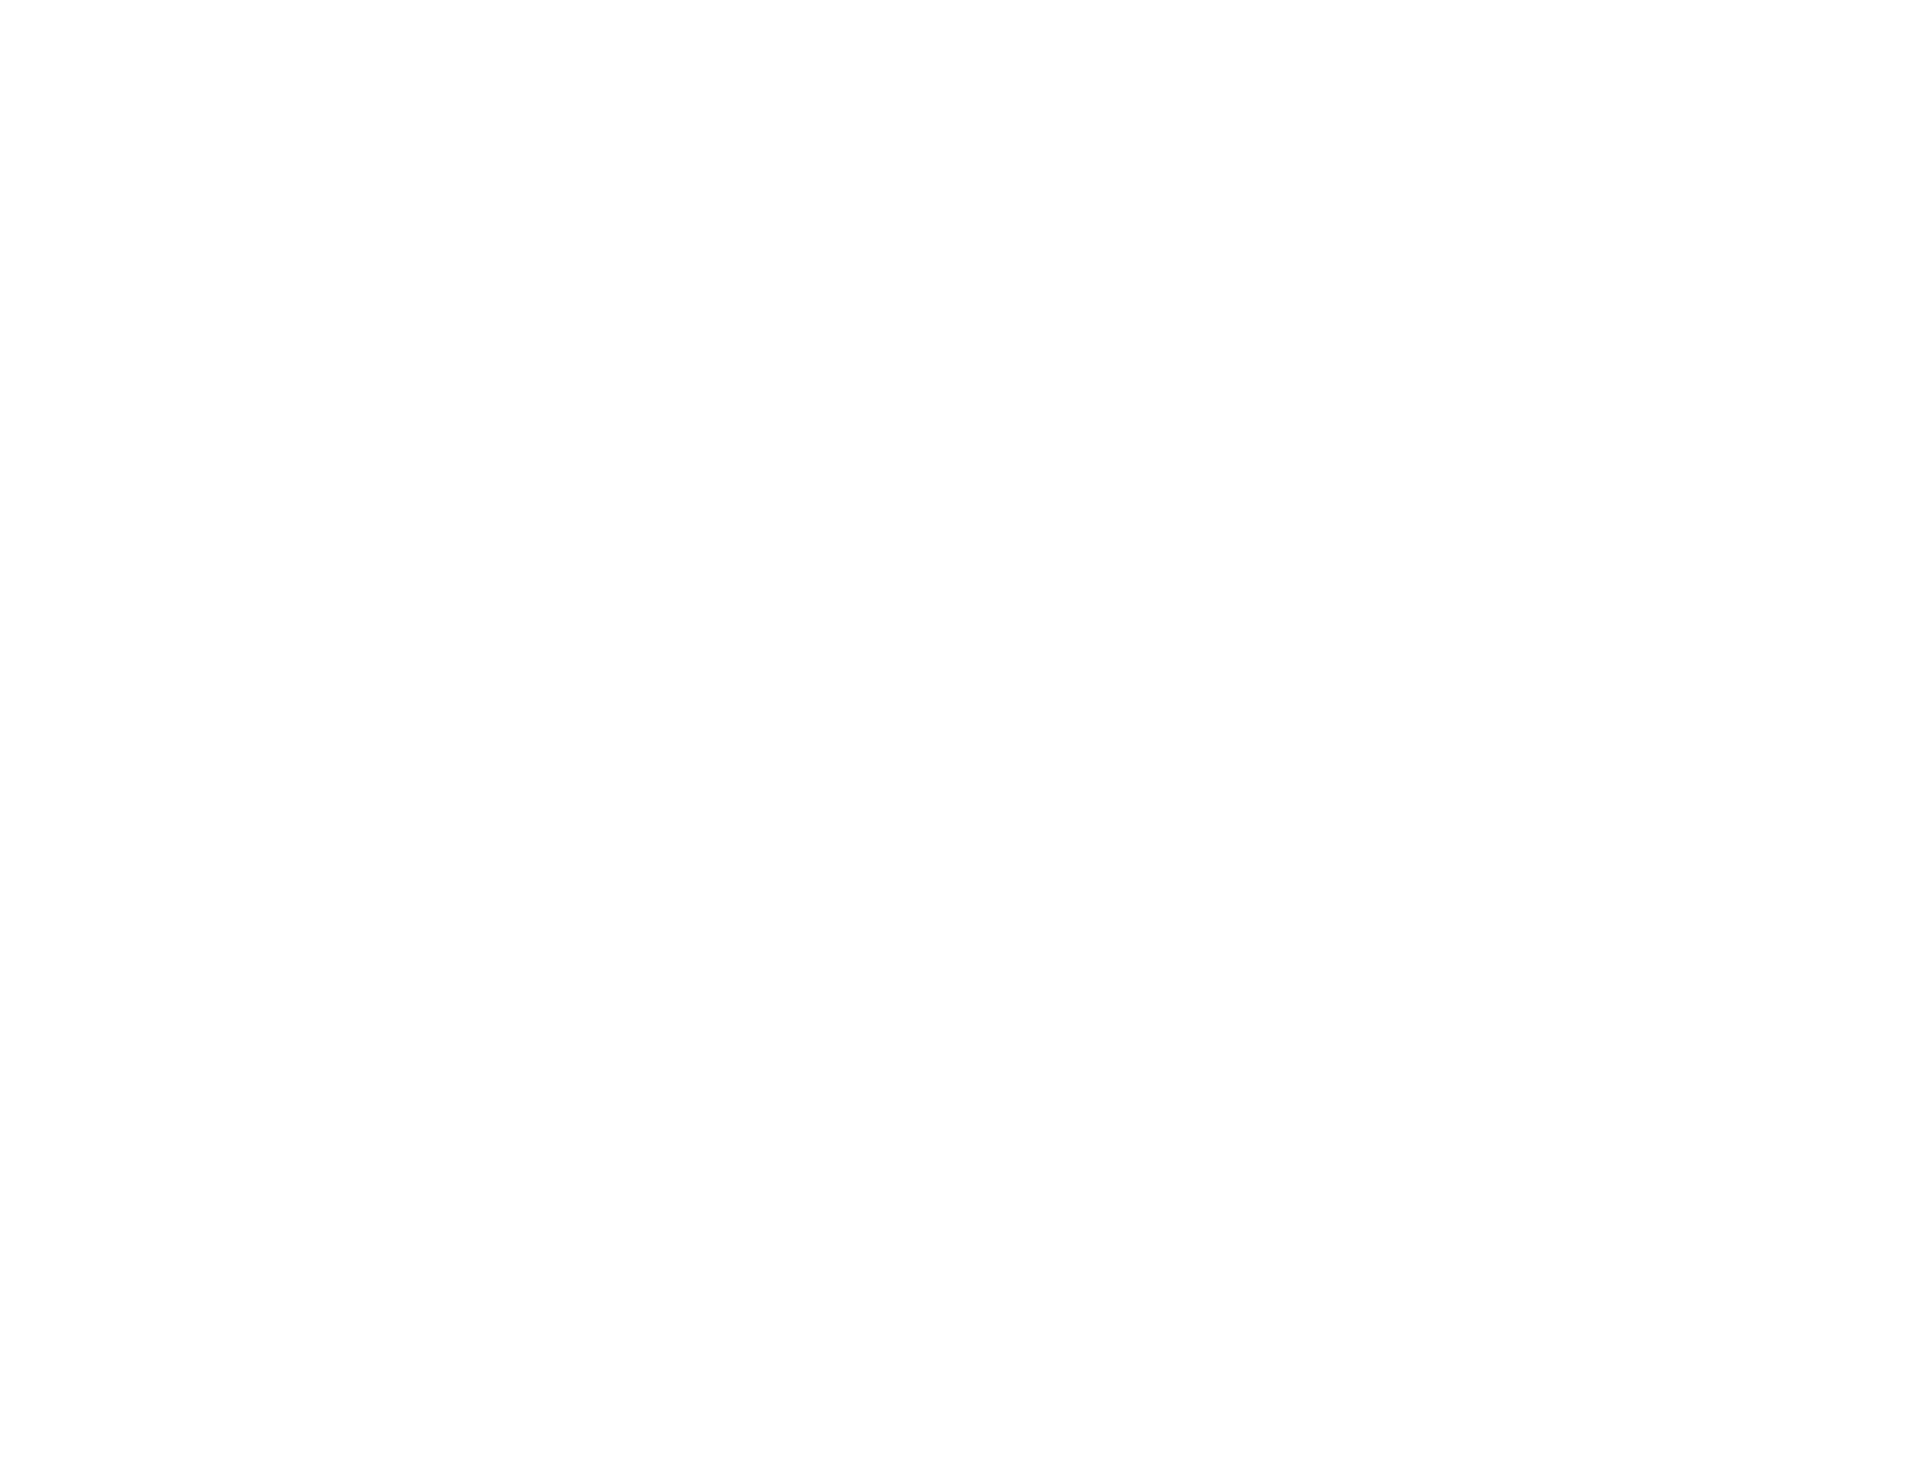 RTL Interactive